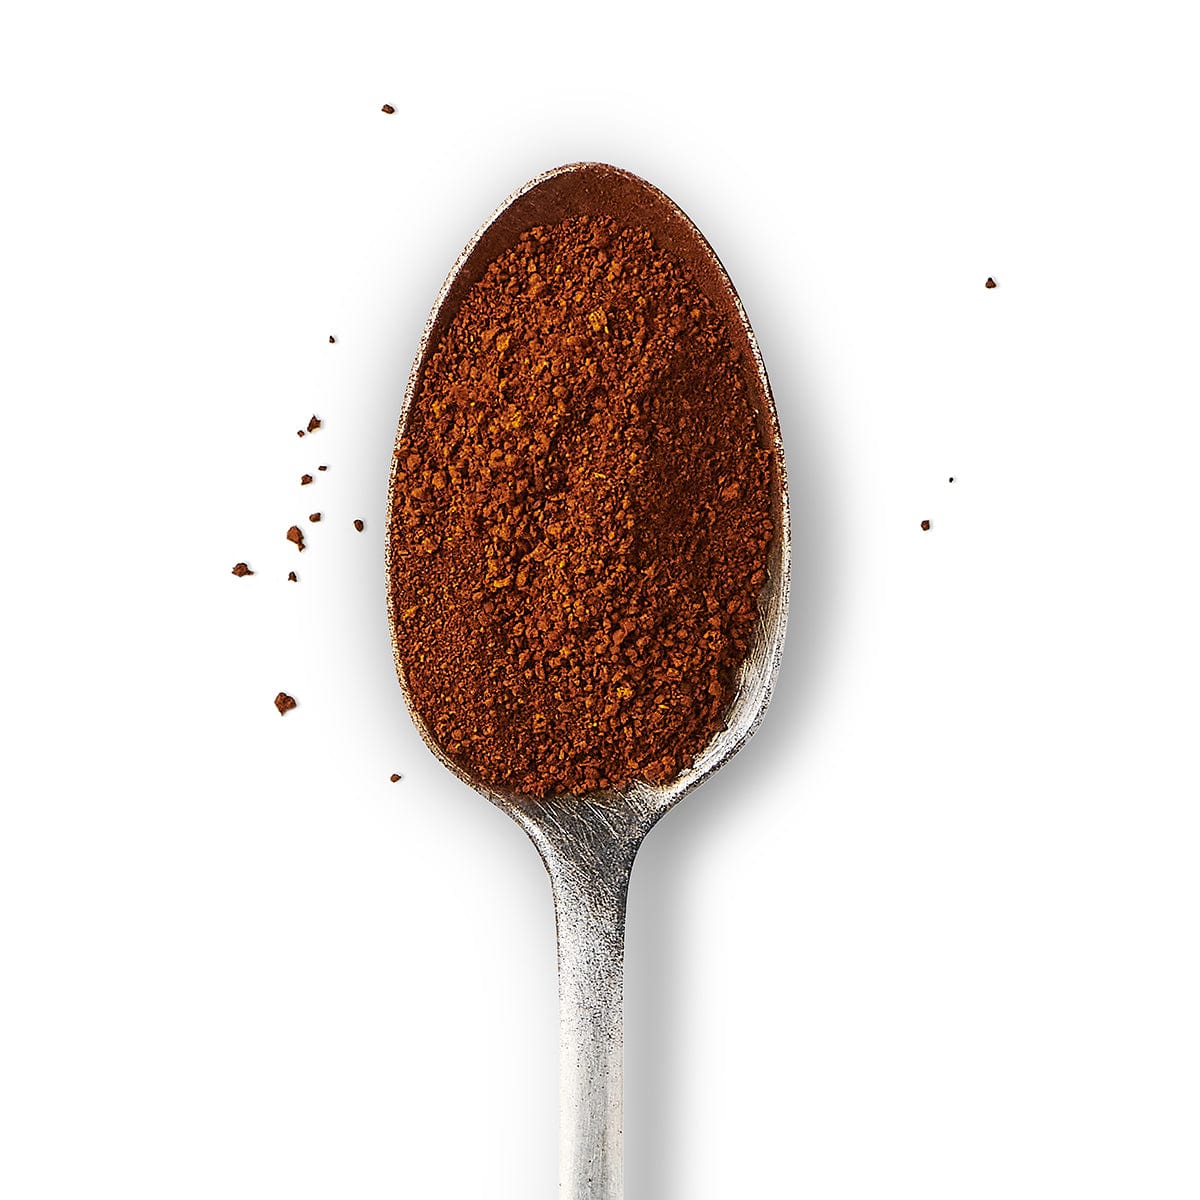 A spoon full of Chaga Powder against a white background. 